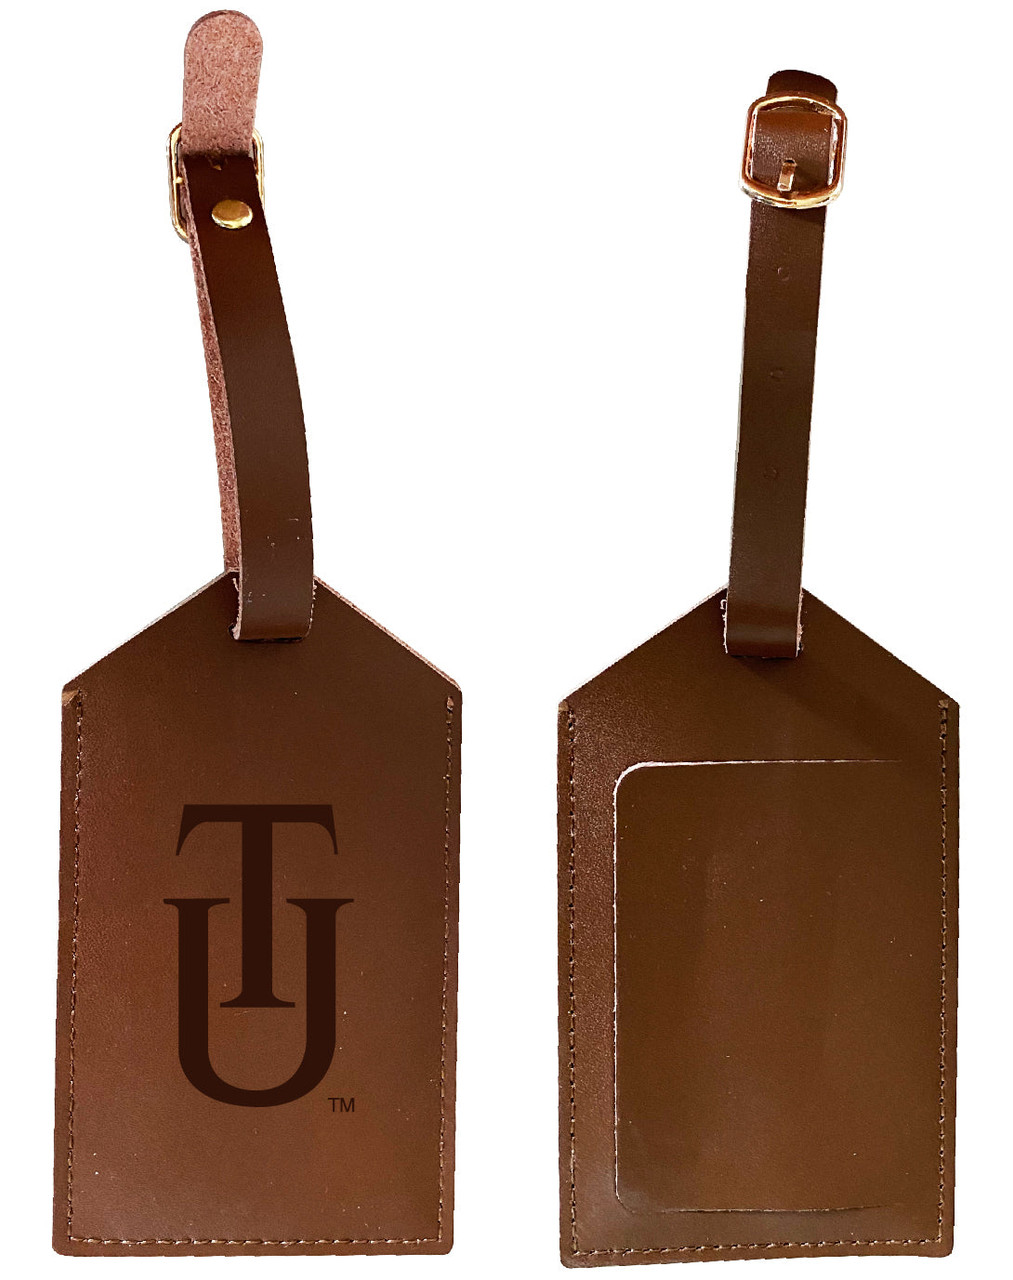 Tuskegee University Leather Luggage Tag Engraved